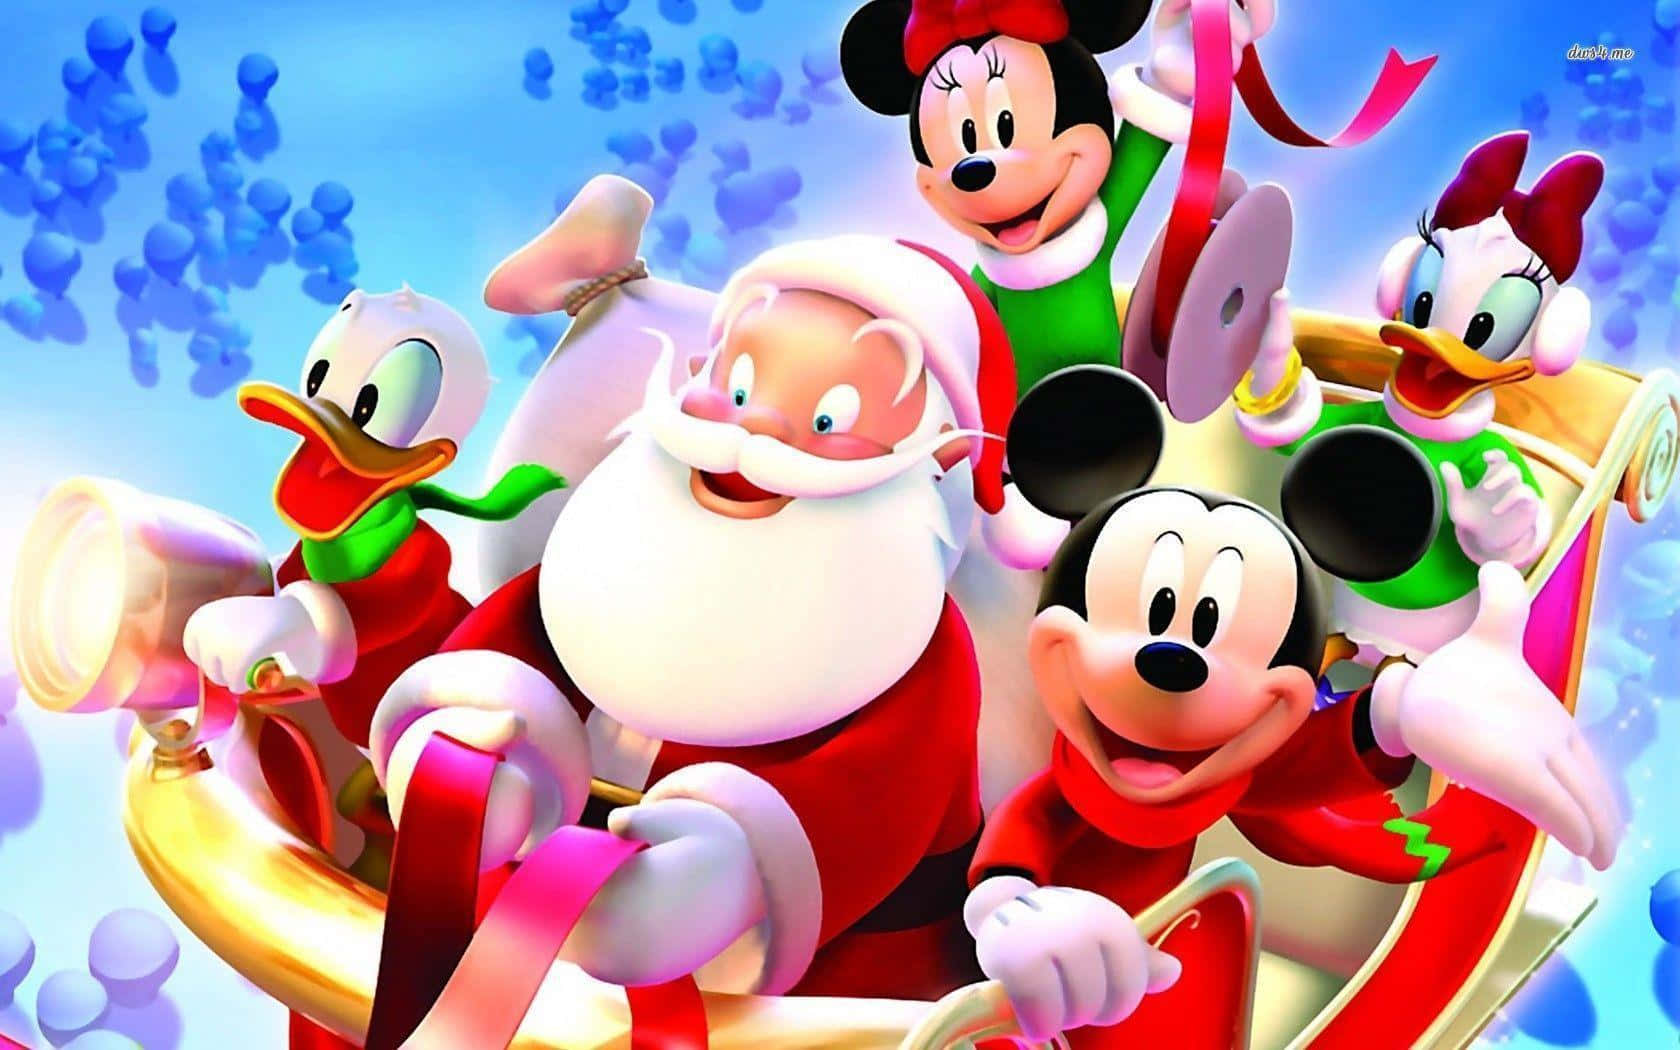 Celebrate the Magic of Disney this Christmas